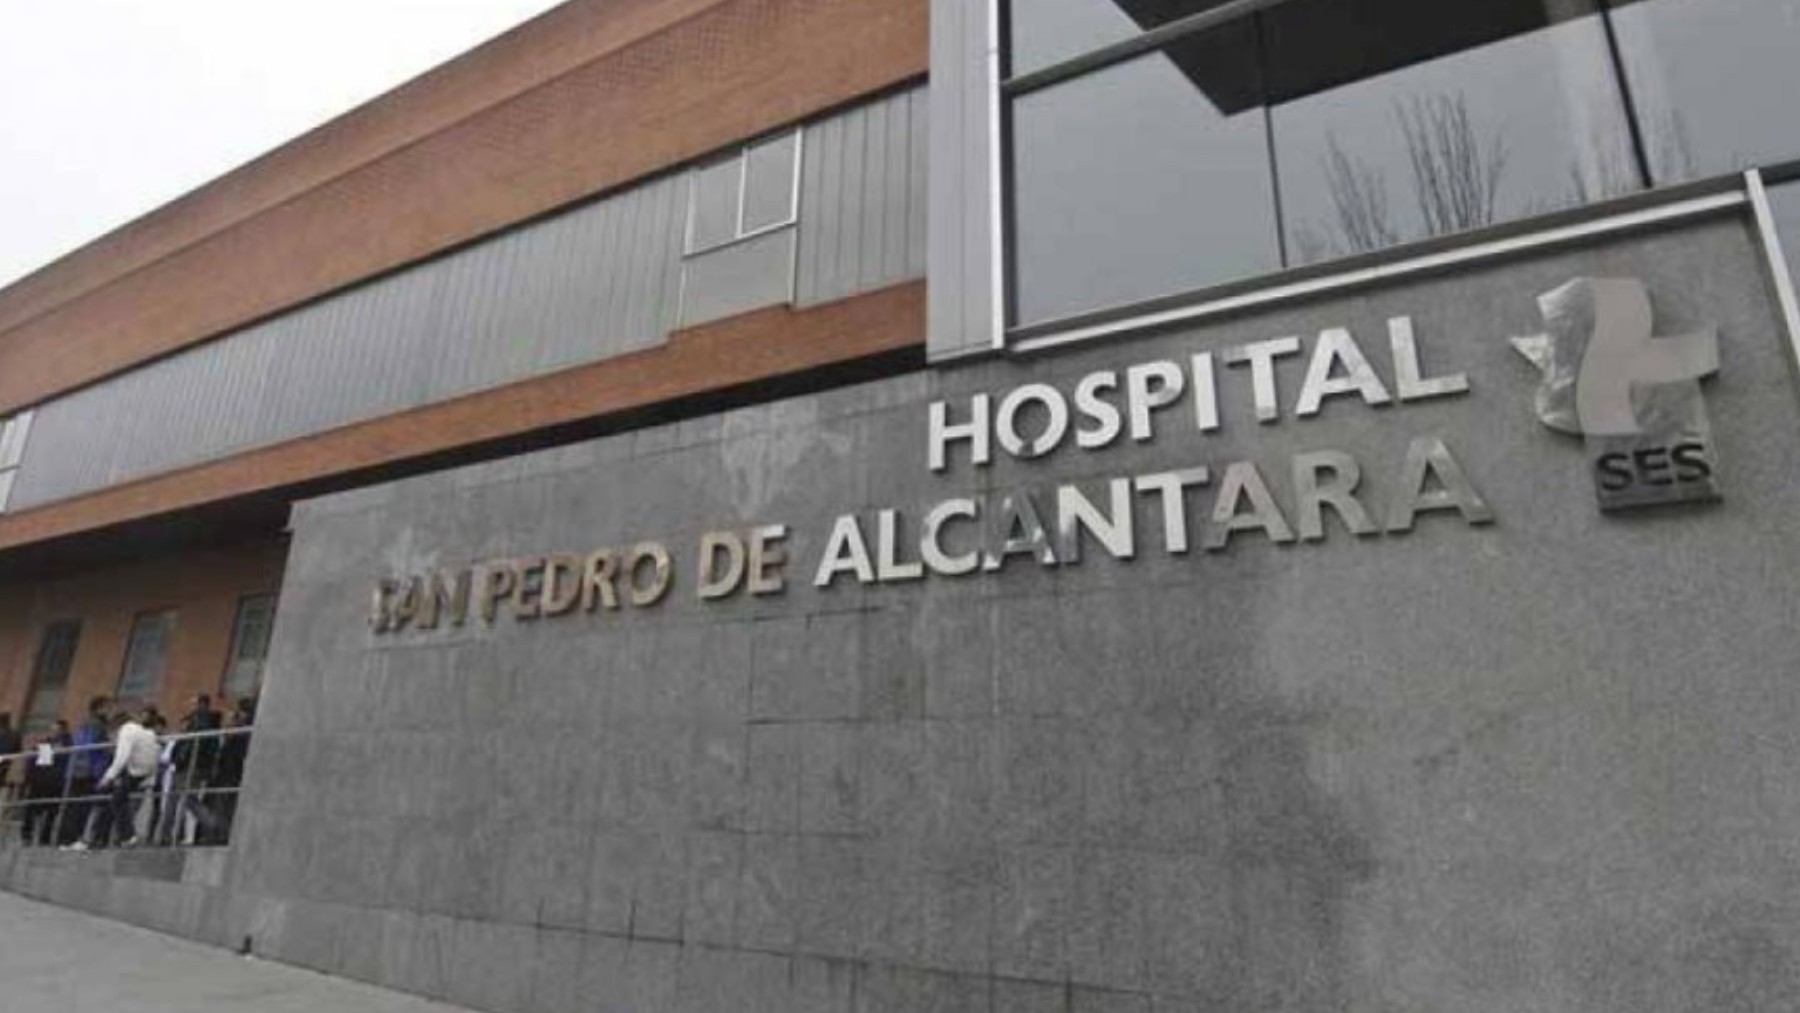 Hospital de San Pedro de Alcántara (Cáceres).